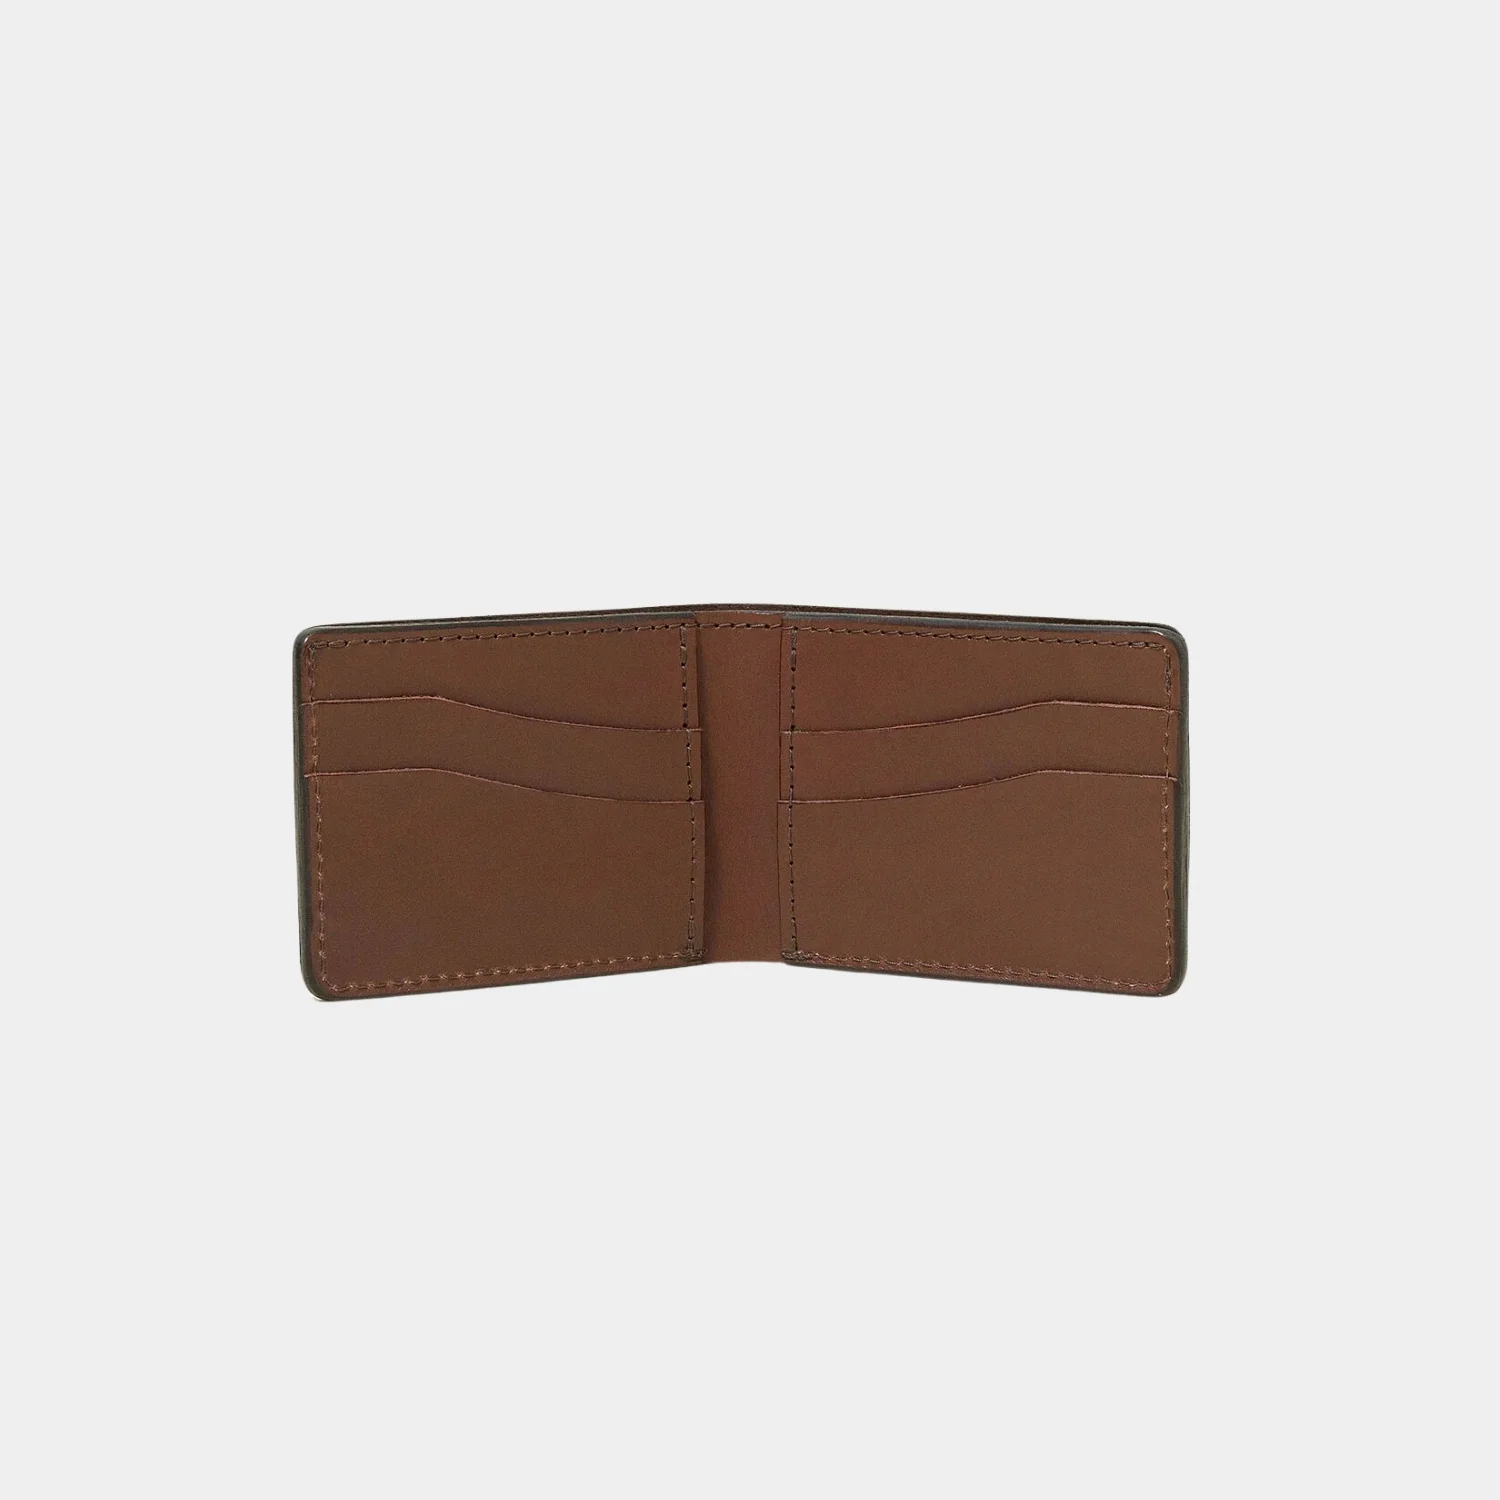 Classic Dark Brown Leather Wallet inner Detail image